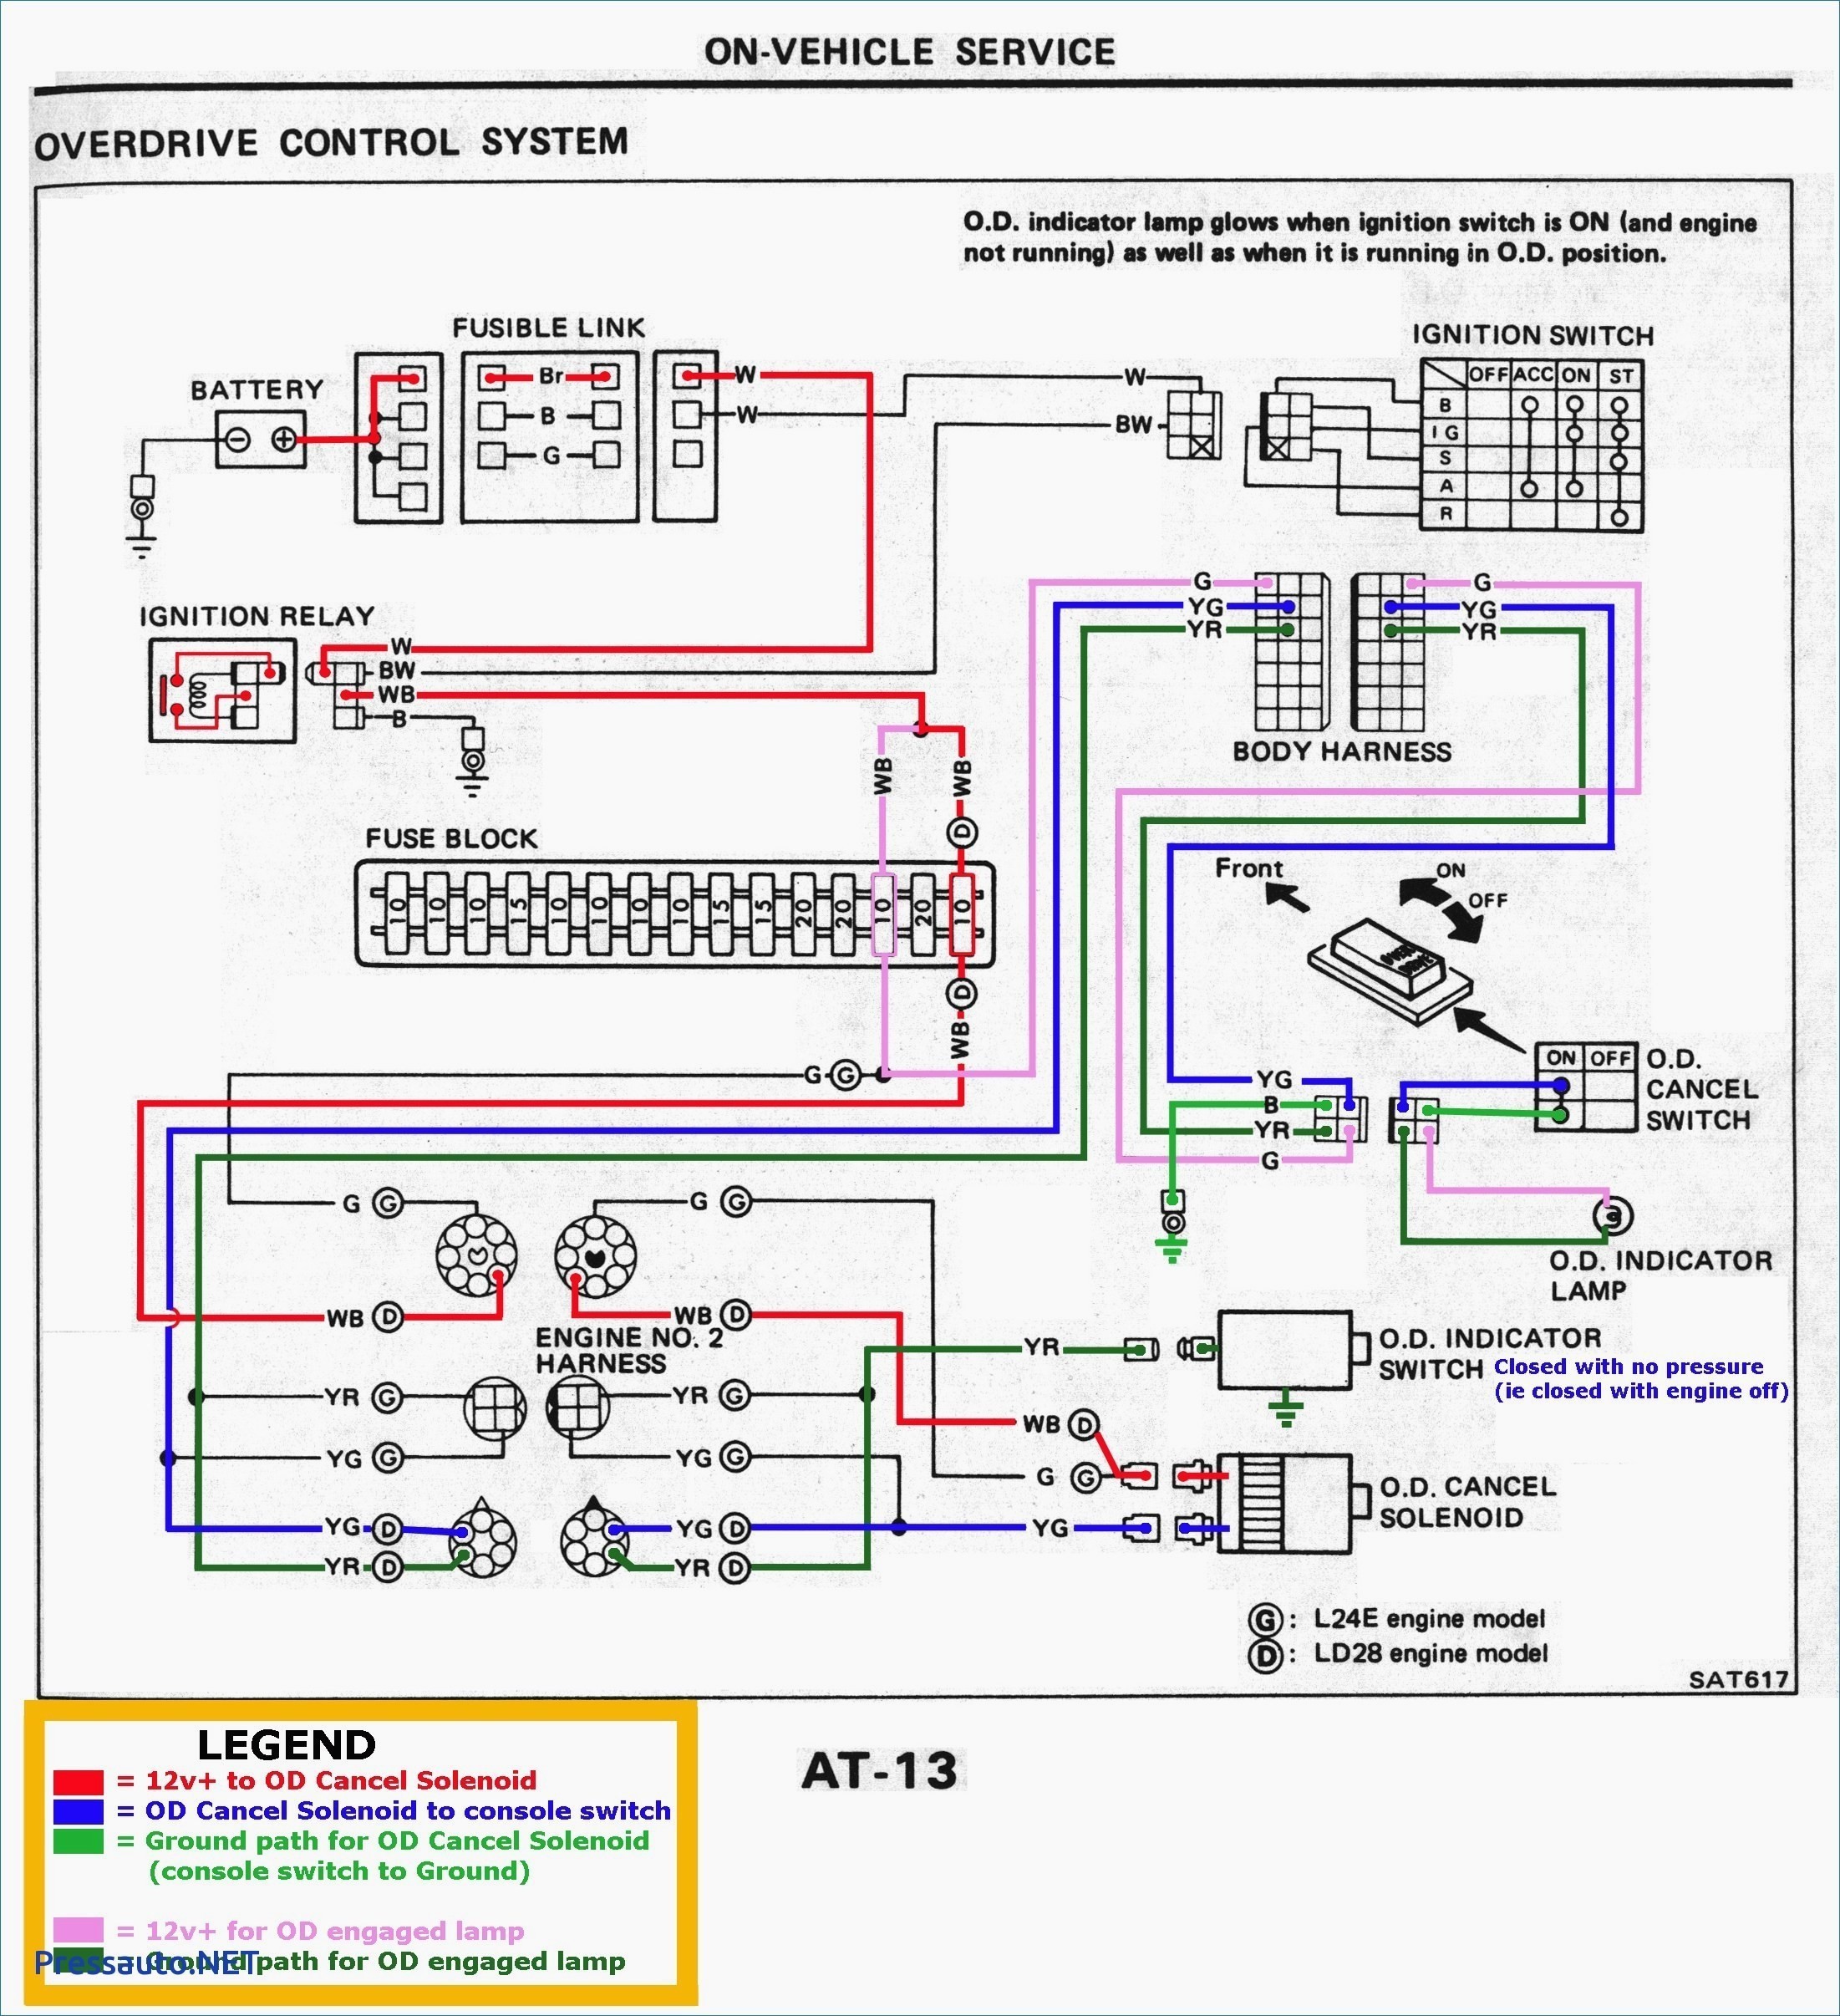 Wiring Diagram Mercury Ignition Switch B Mariner Outboard Motor Wiring Diagram Of Wiring Diagram Mercury Ignition Switch